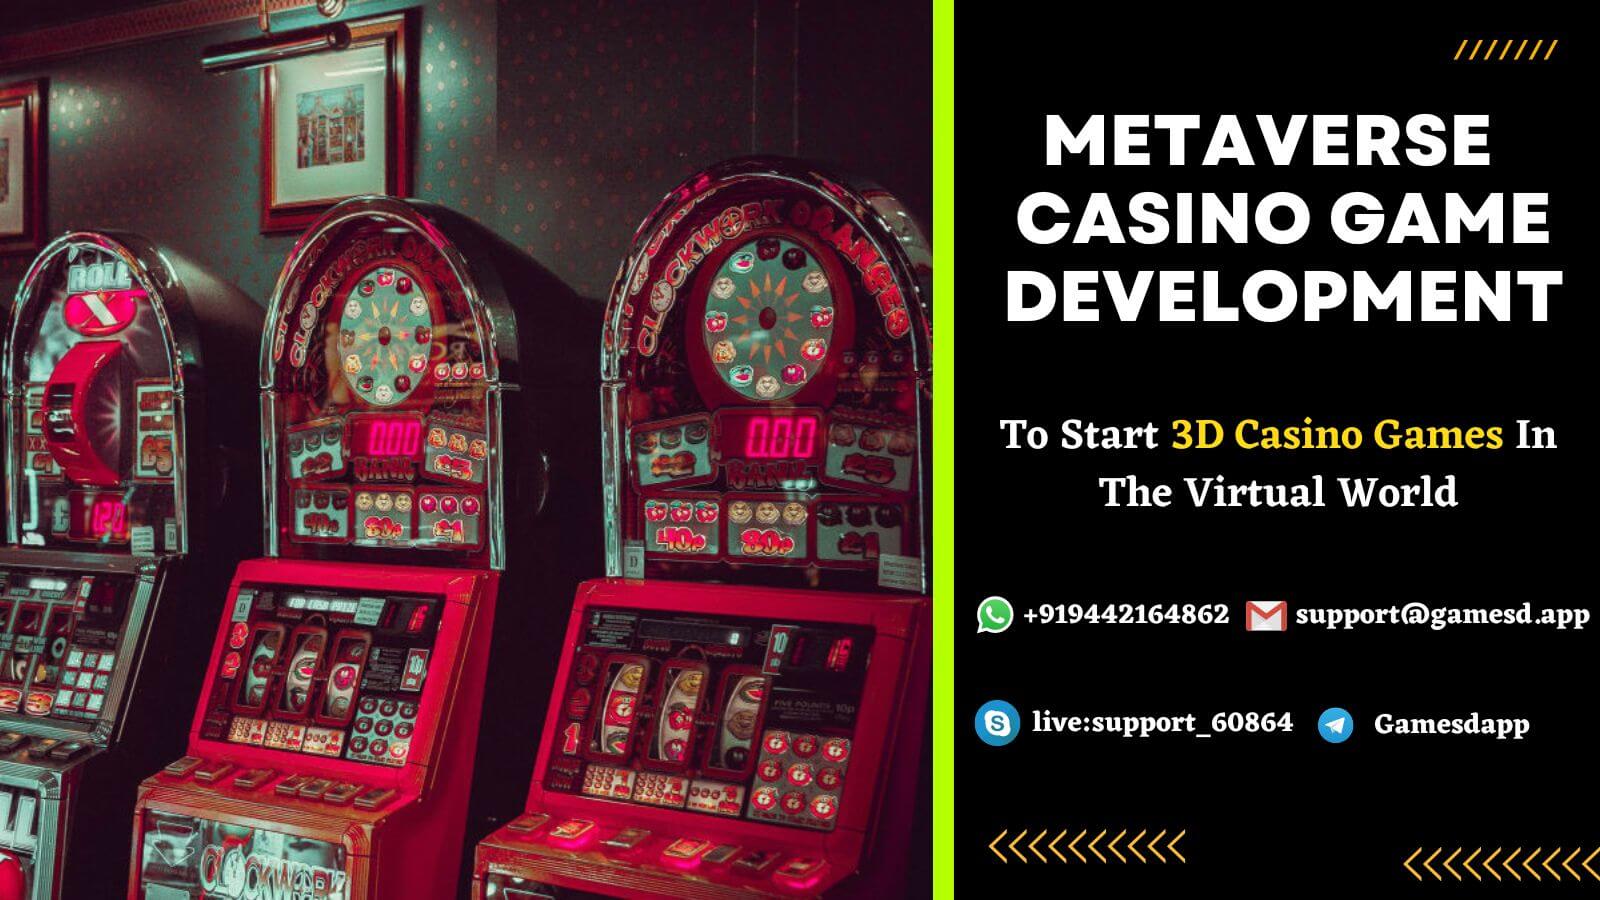 Metaverse Casino Games Development Company - To Build a Virtual Casino Gaming Platform Now